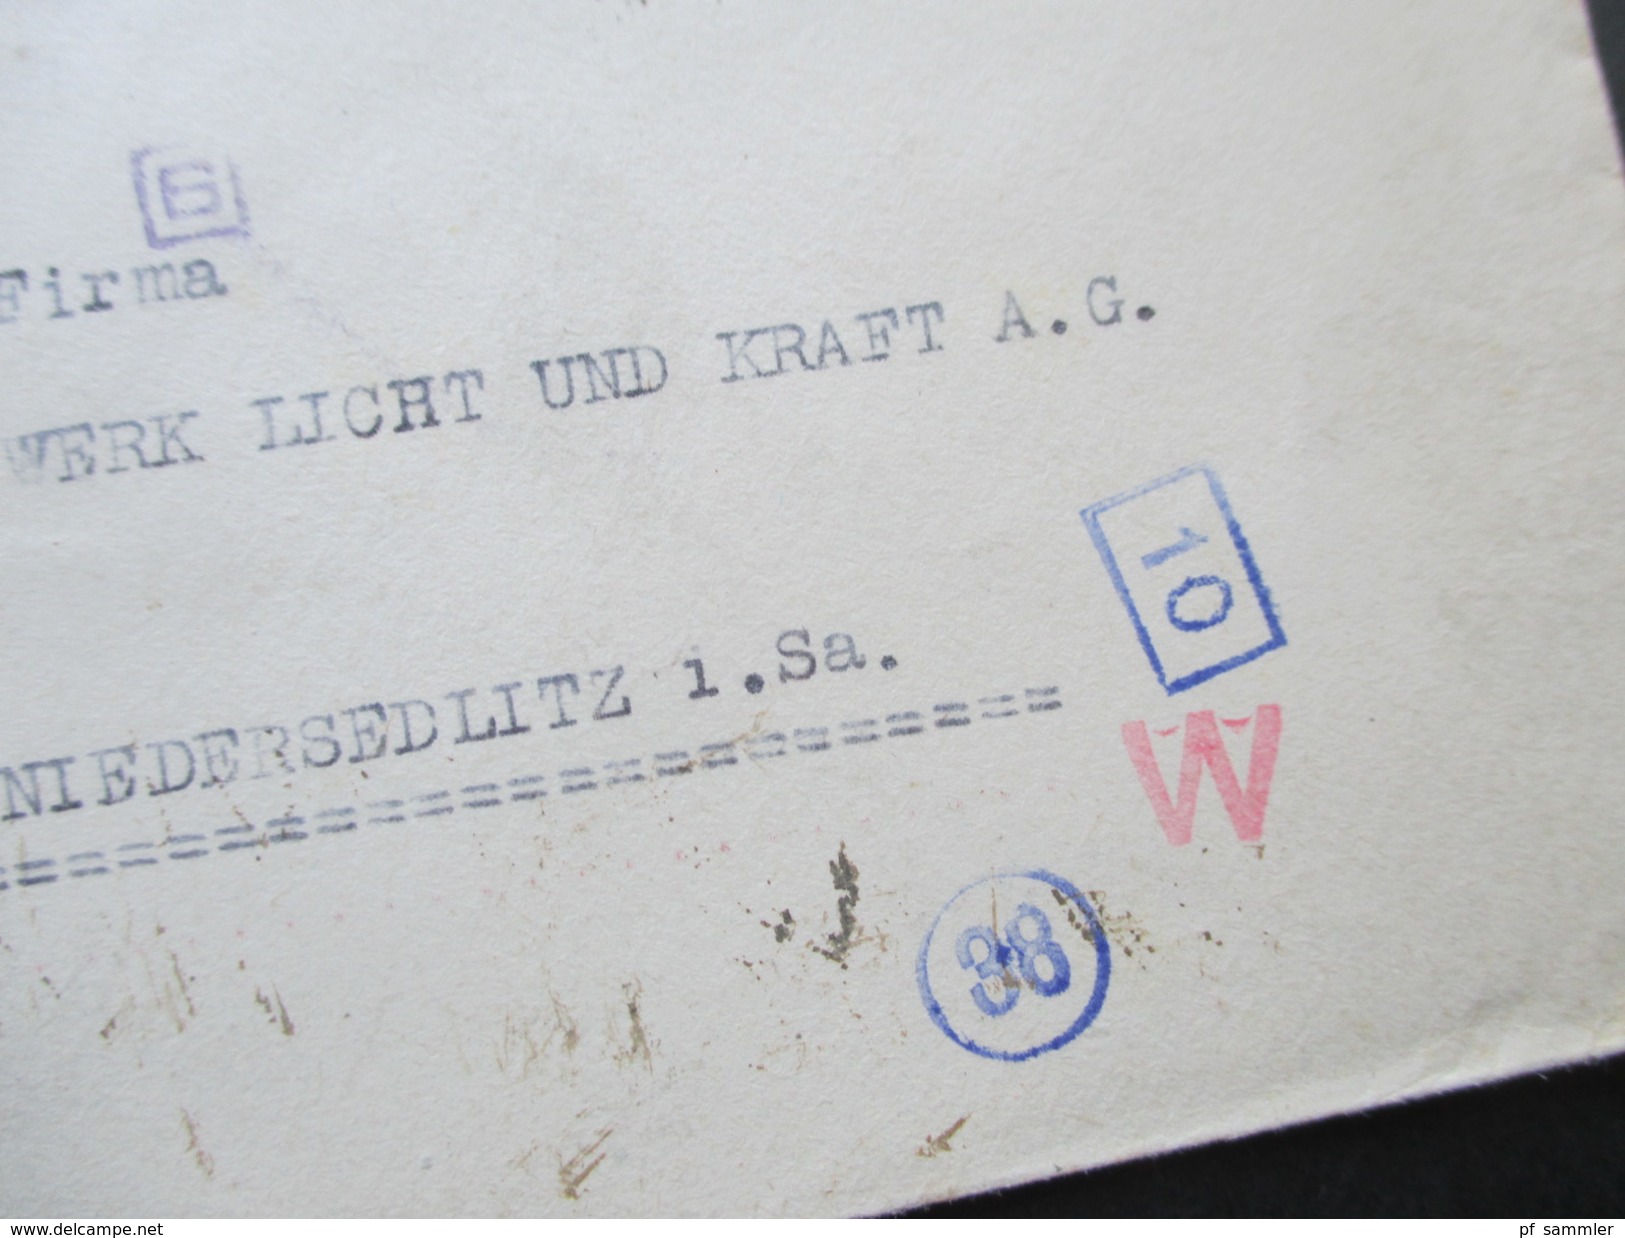 Italien 1942 Zensurpost  Viele Zensurstempel / Mehrfachzensur . OKW Wehrmacht / Verificato Per Censura Torino 16 Usw... - Kriegspropaganda